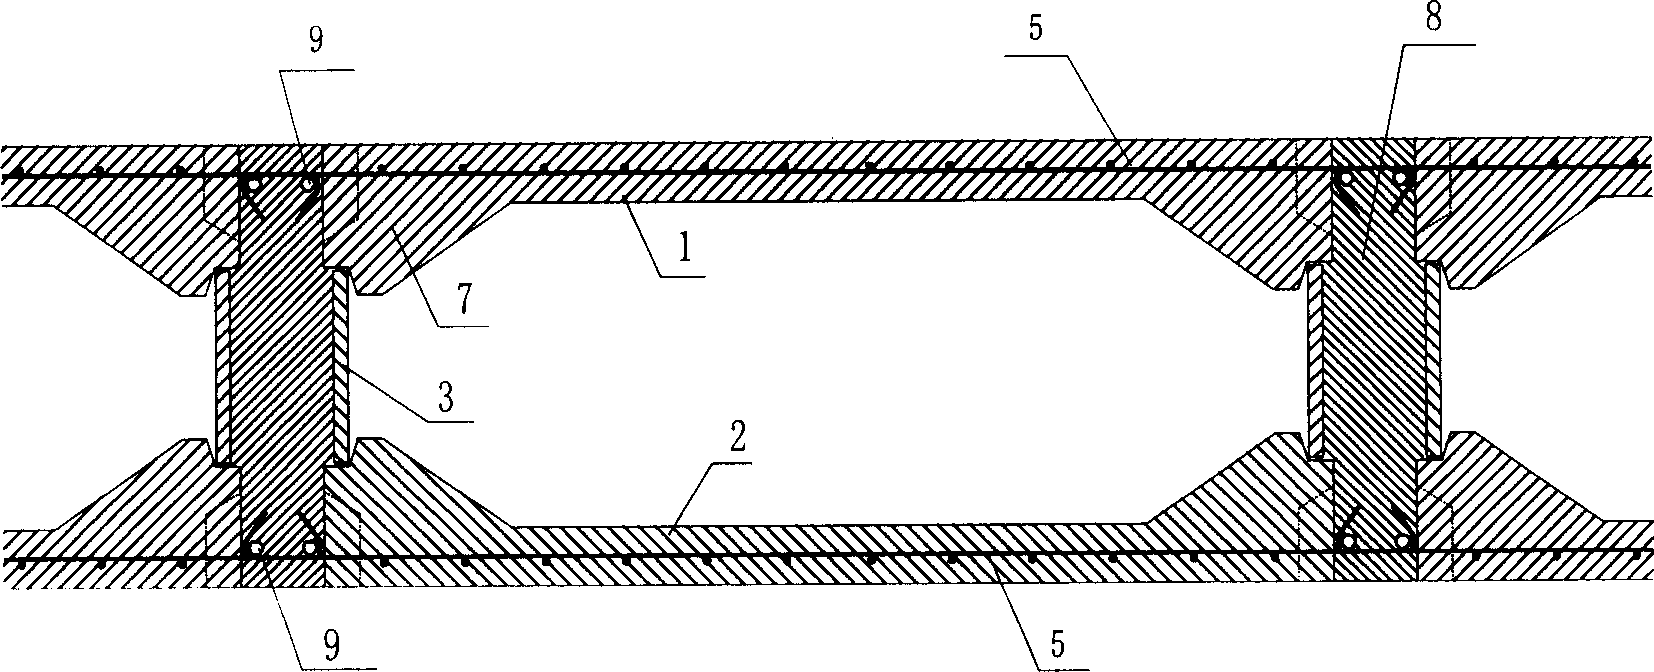 Method for processing concrete mesh-beam floor system